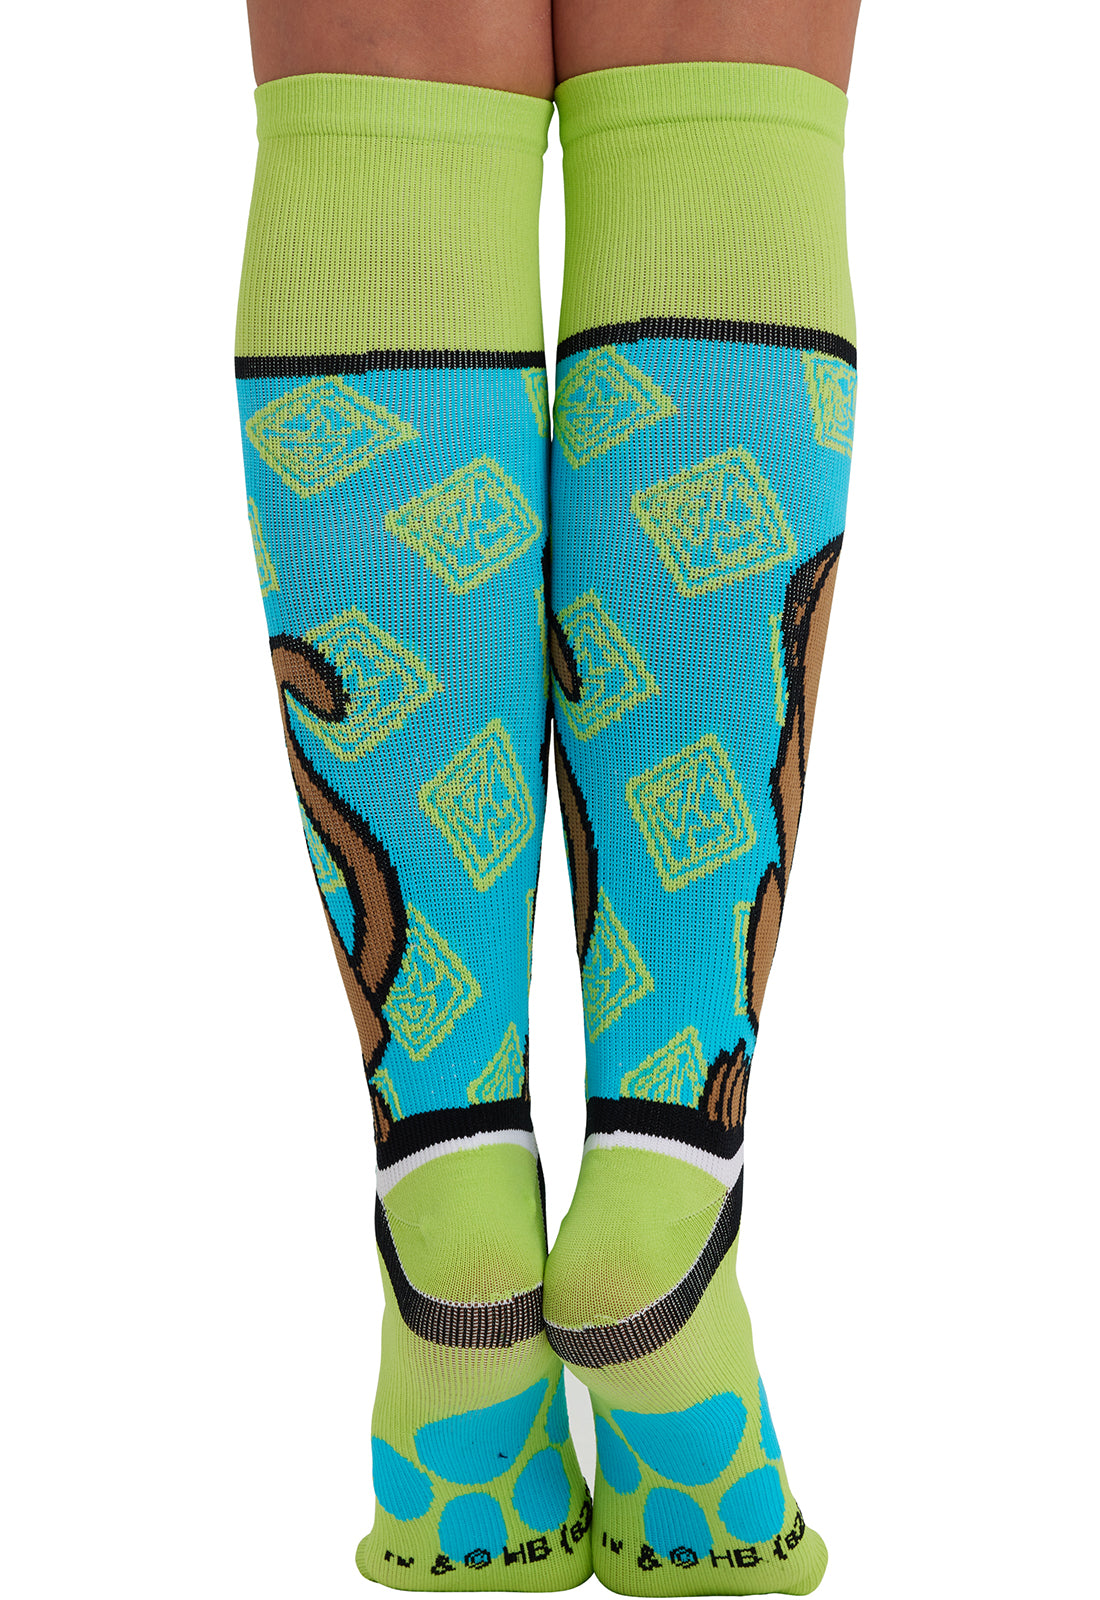 Compression Socks with Disney Prints Compression Socks Cherokee Legwear   